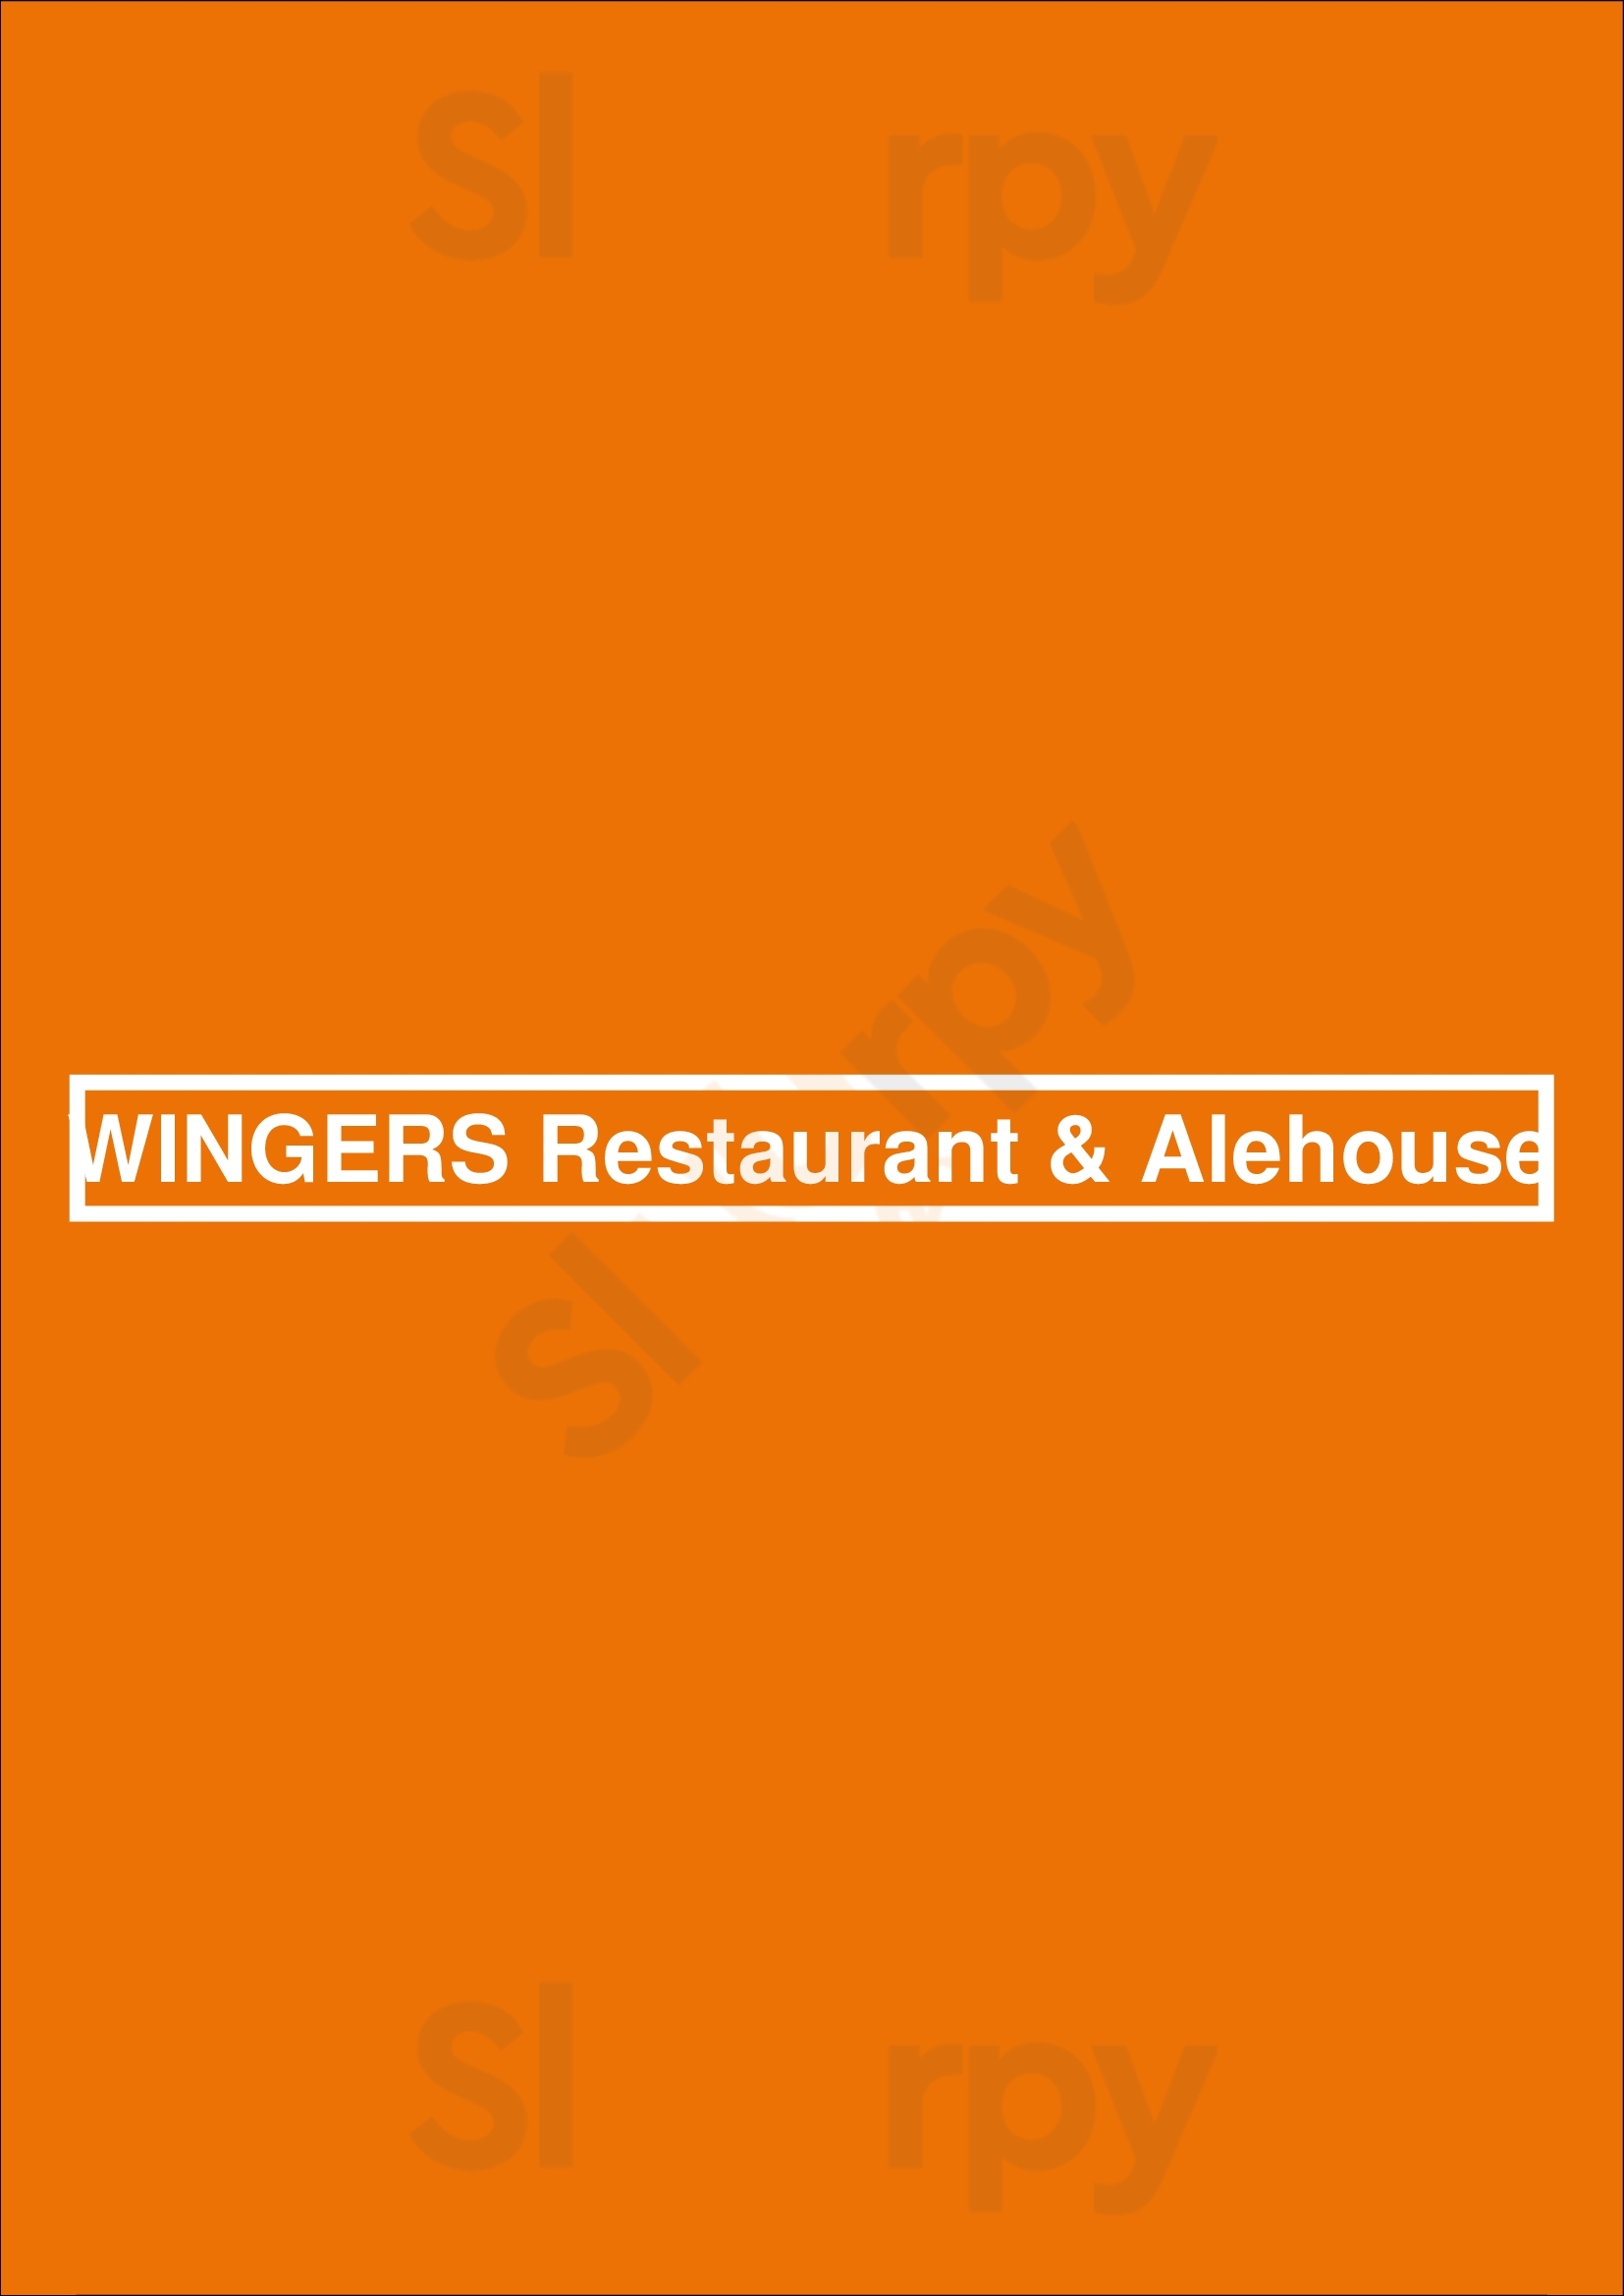 Wingers Restaurant & Alehouse Nampa Menu - 1